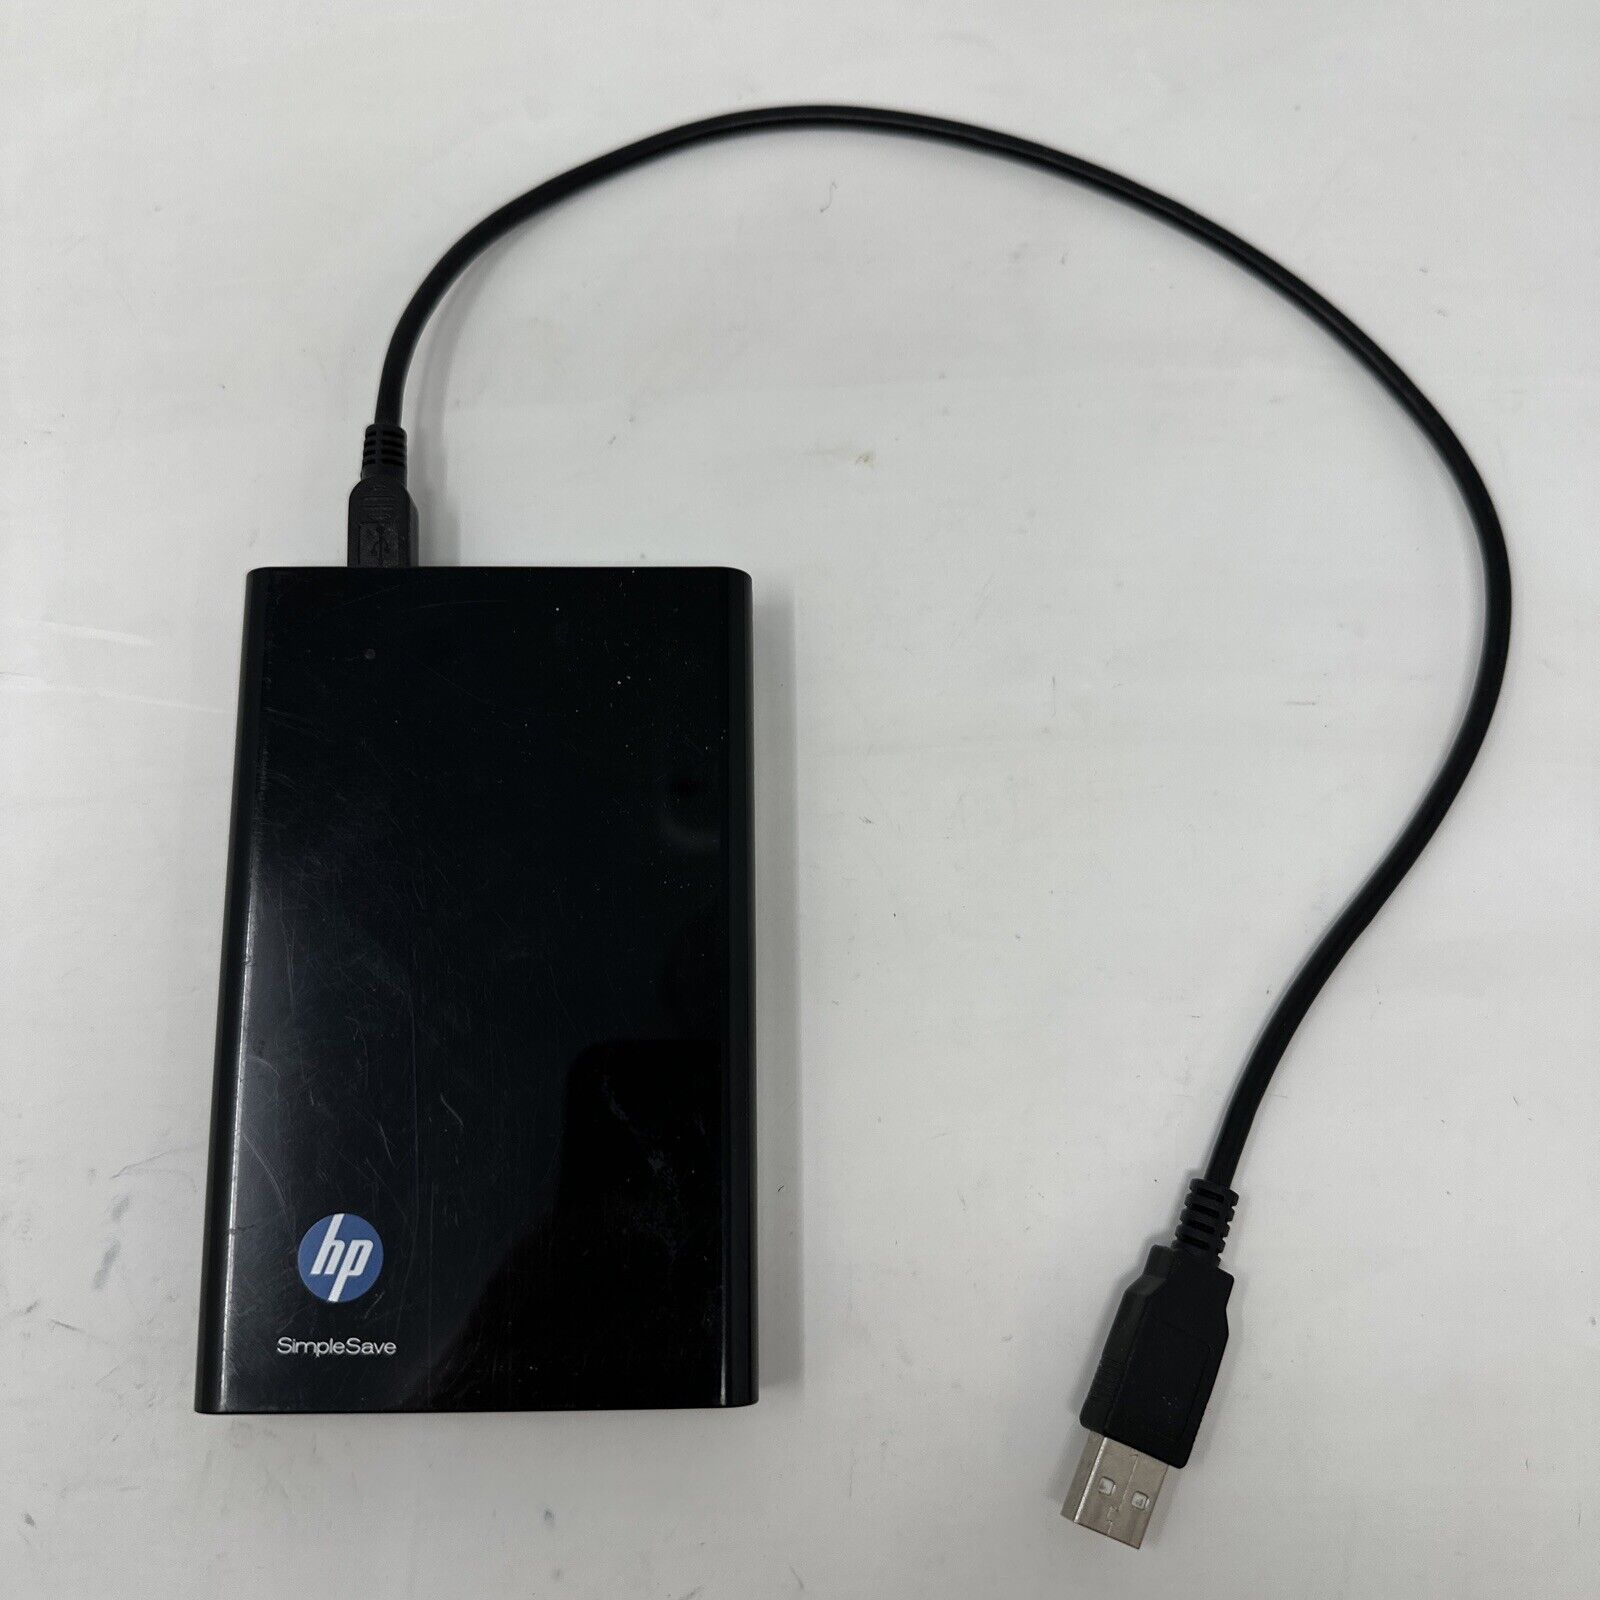 HP SimpleSave SD320A Black 320GB USB 2.0 Portable 2.5-inch External Hard Drive